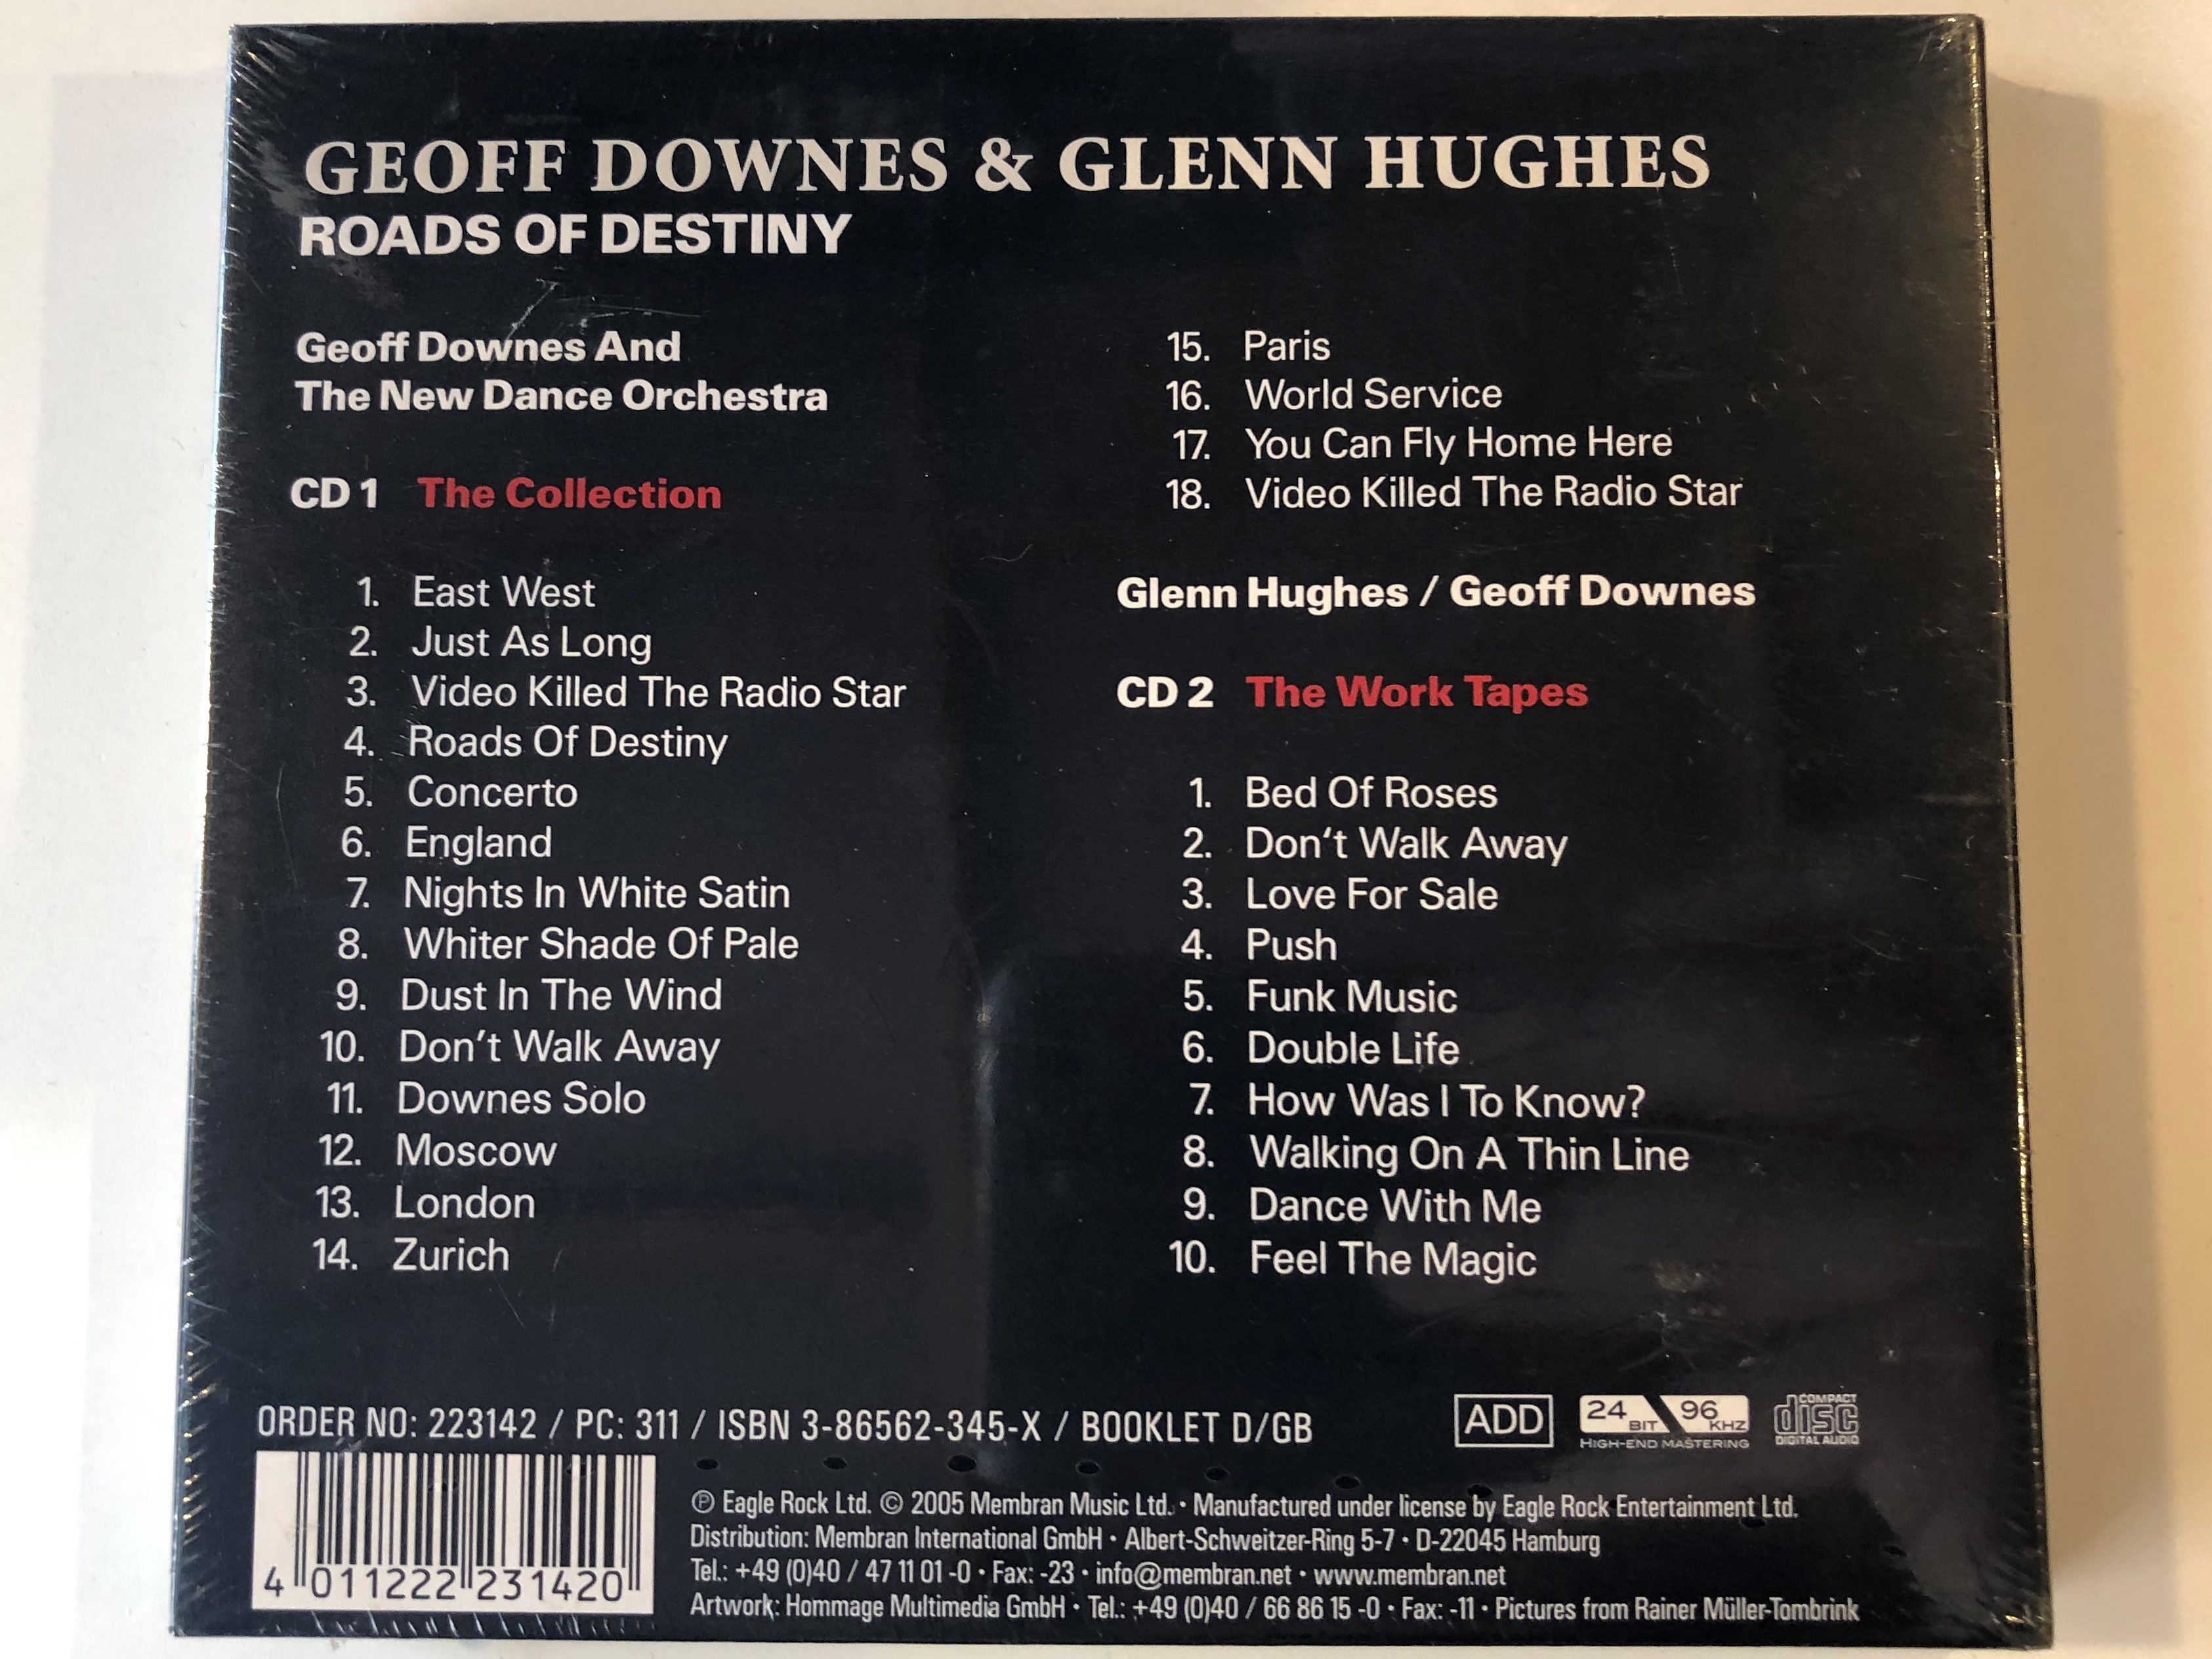 geoff-downes-glenn-hughes-roads-of-destiny-ambitions-2x-audio-cd-2005-223142-2-.jpg